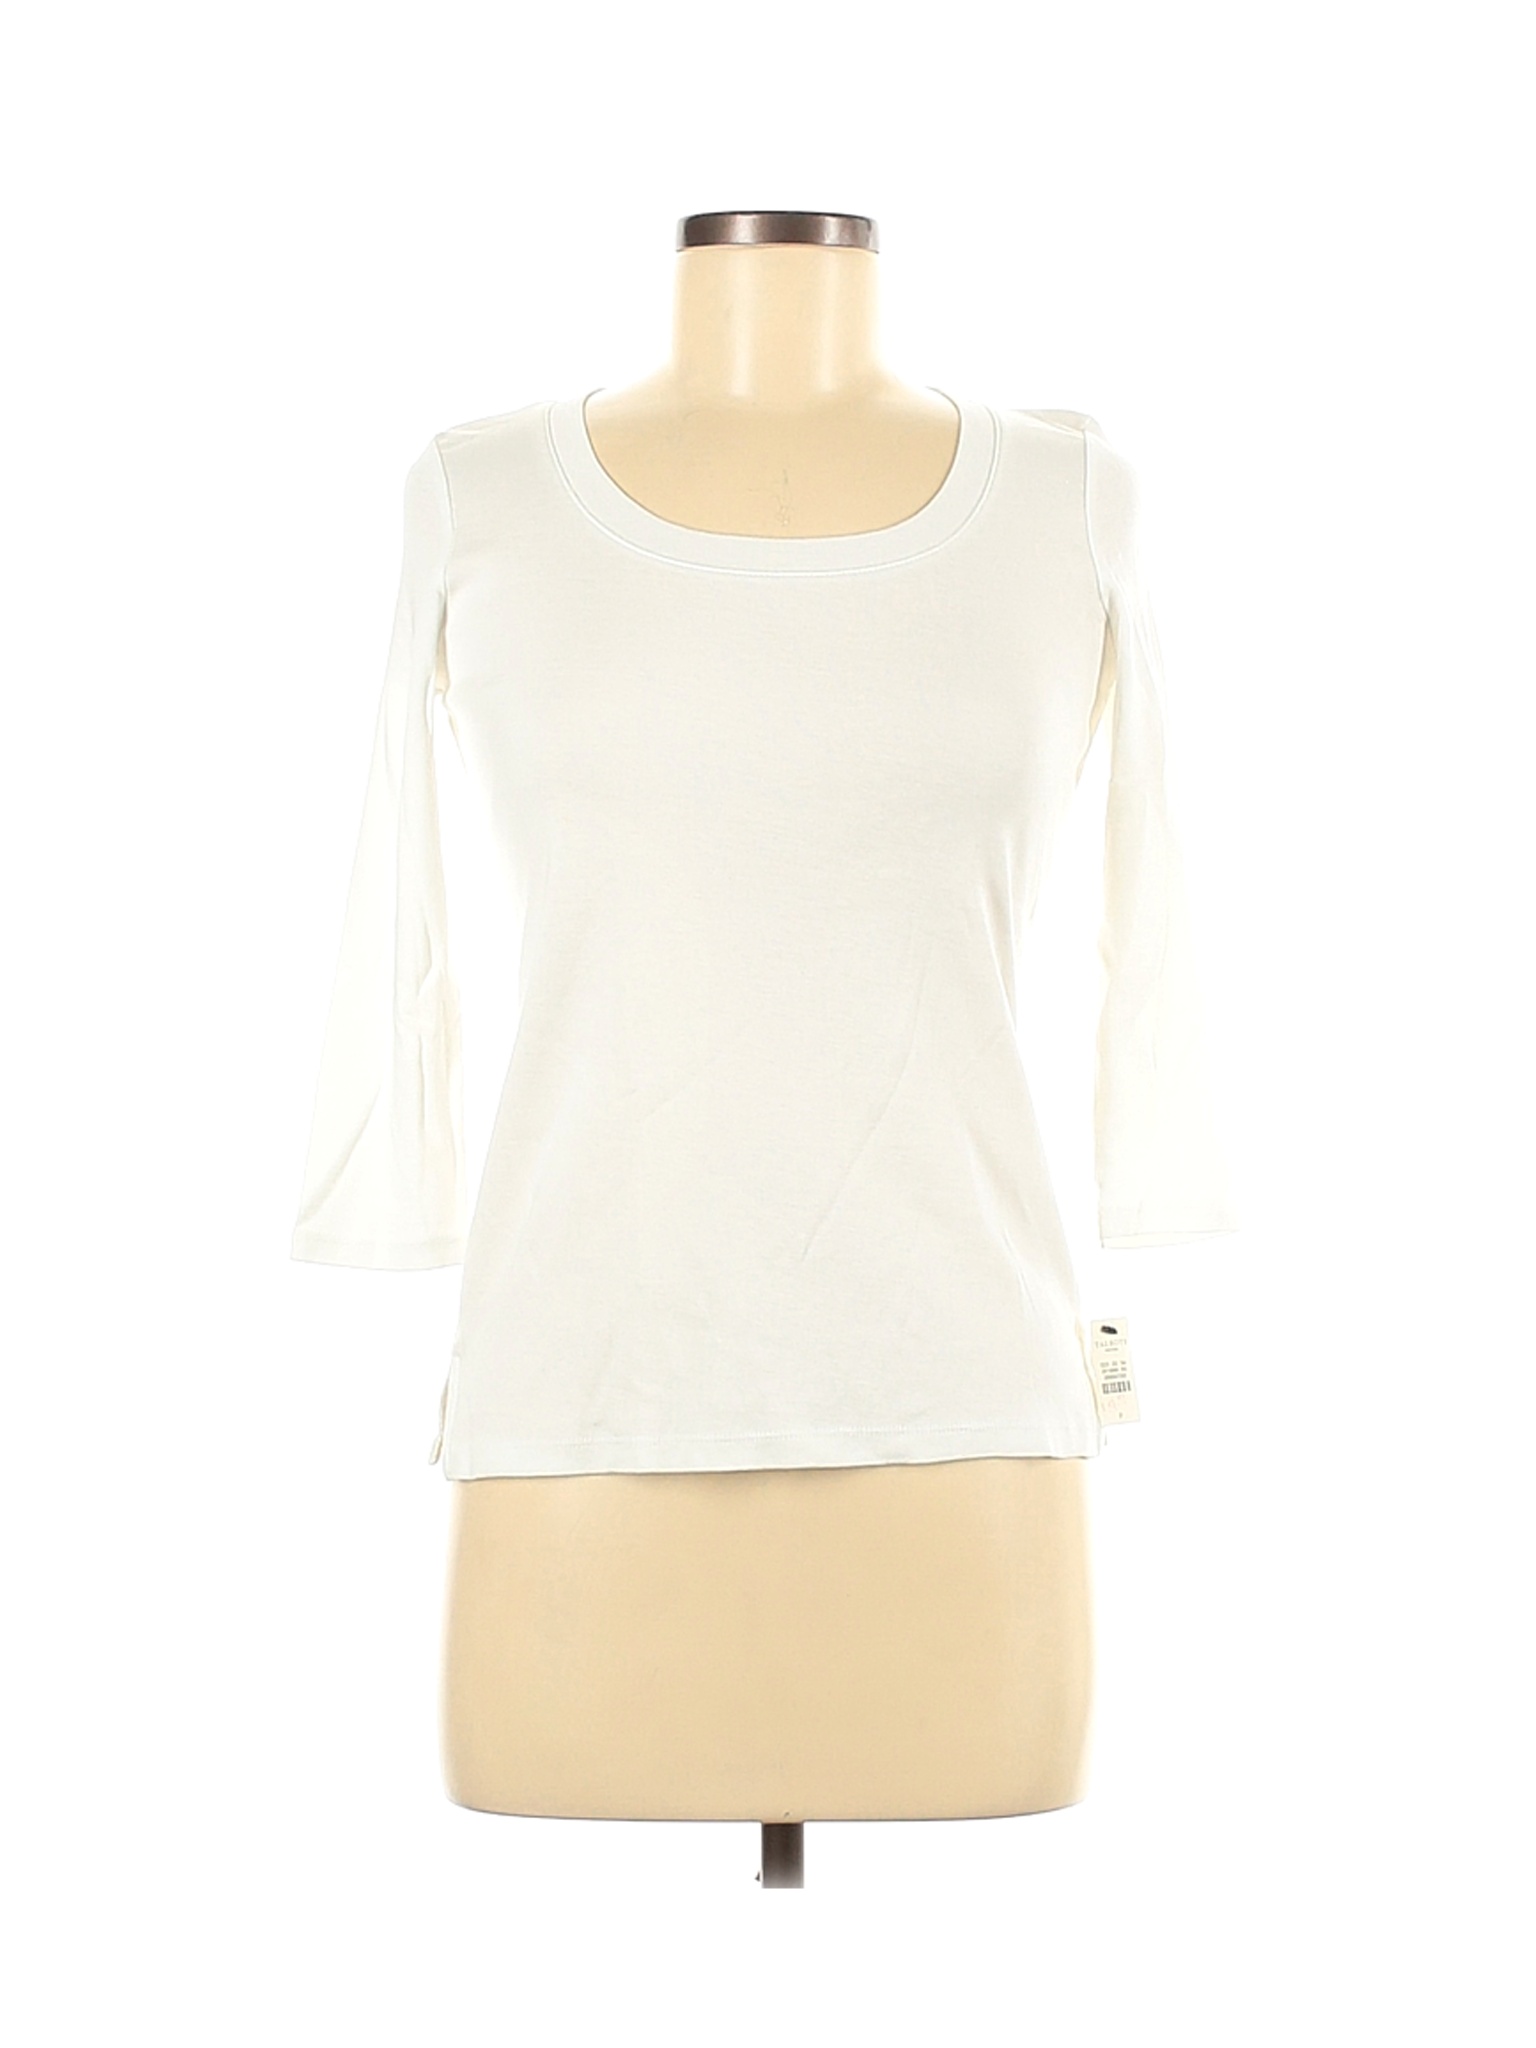 NWT Talbots Women White 3/4 Sleeve T-Shirt P | eBay